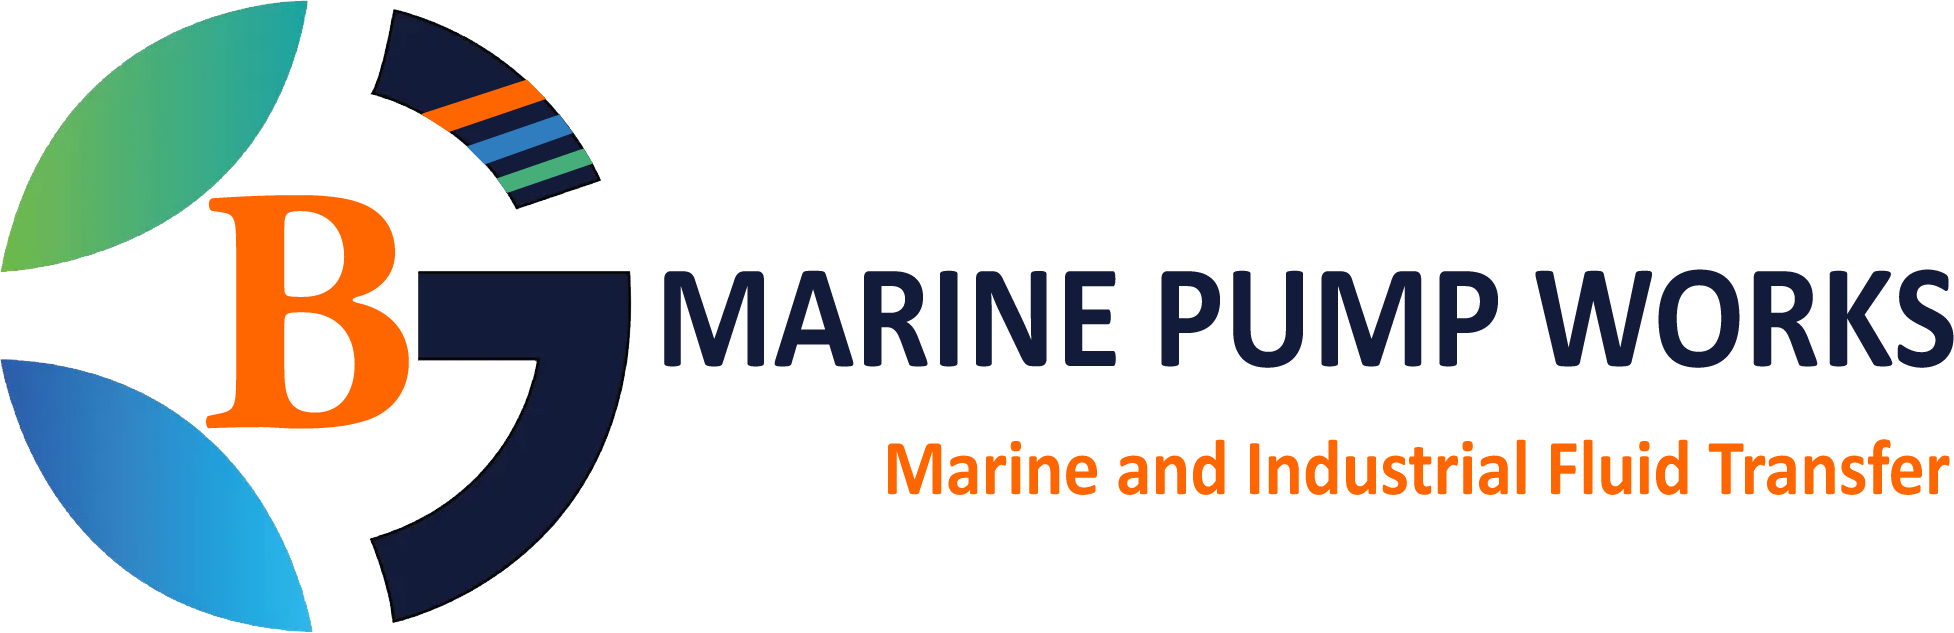 Marine Pump Works